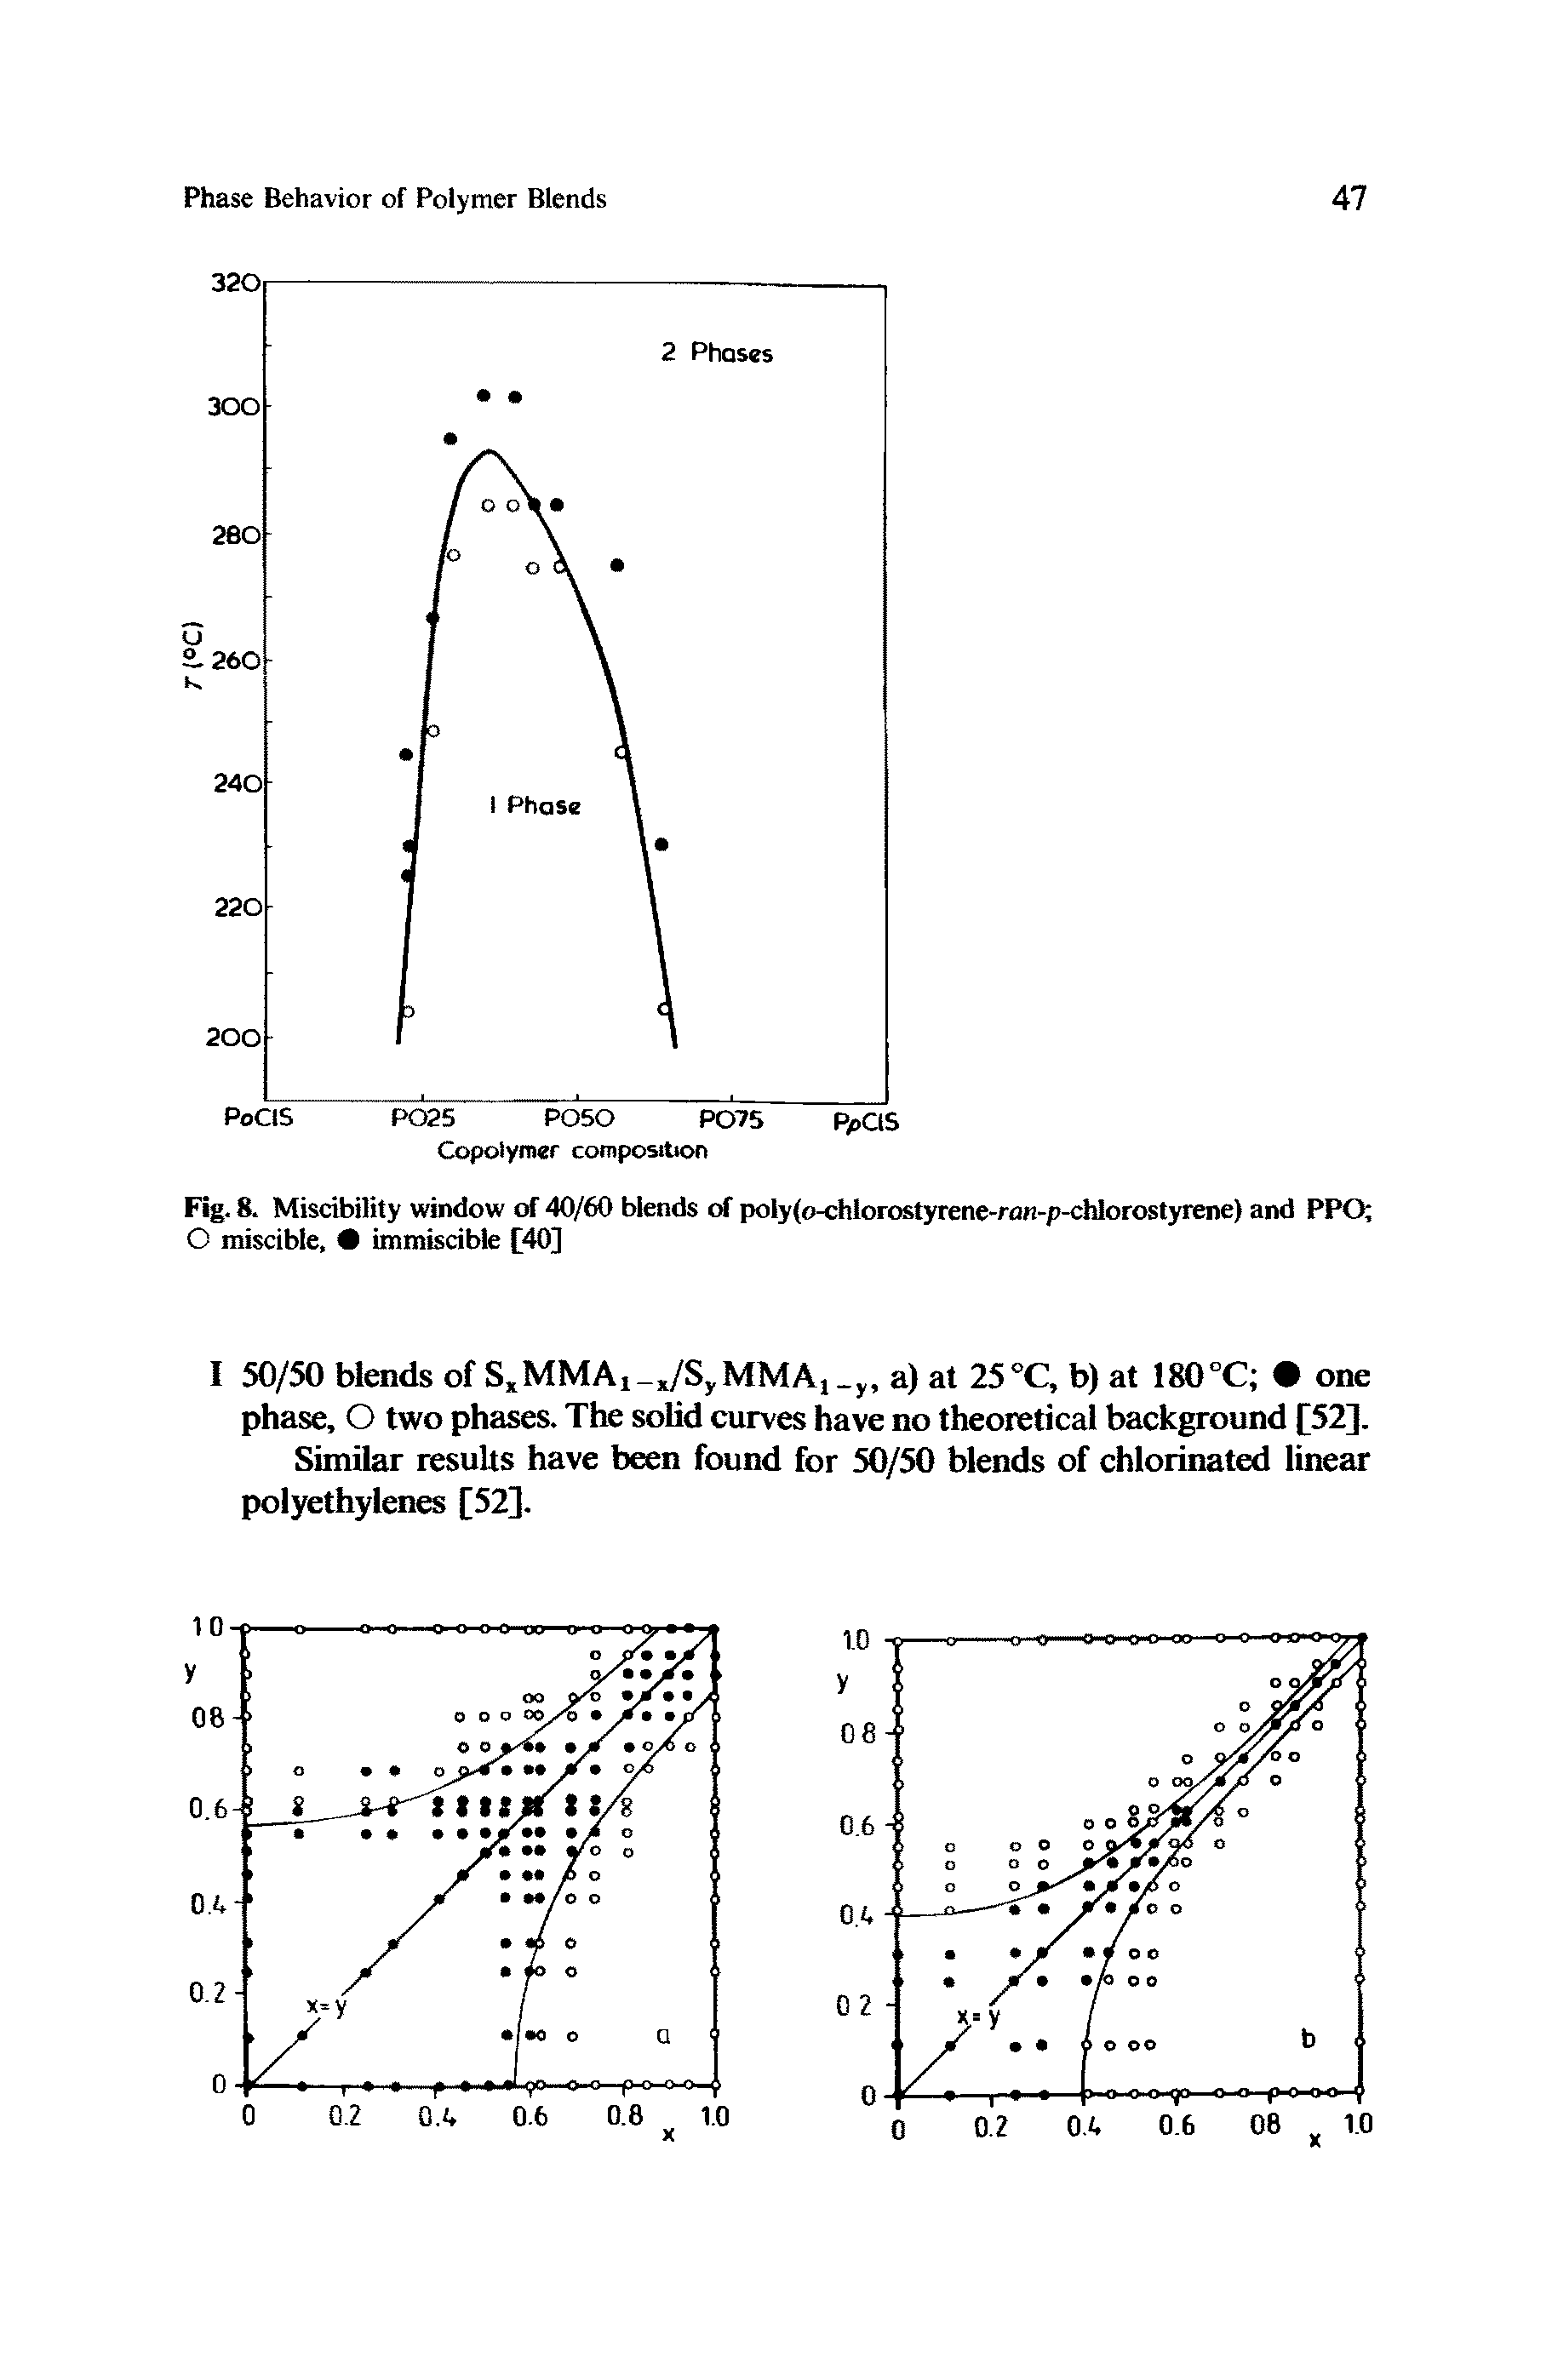 Fig. 8. Miscibility window of 40/60 blends of poly(o-chlorostyrene-rcm-p-chlorostyrene) and PPG O miscible, immiscible [40]...